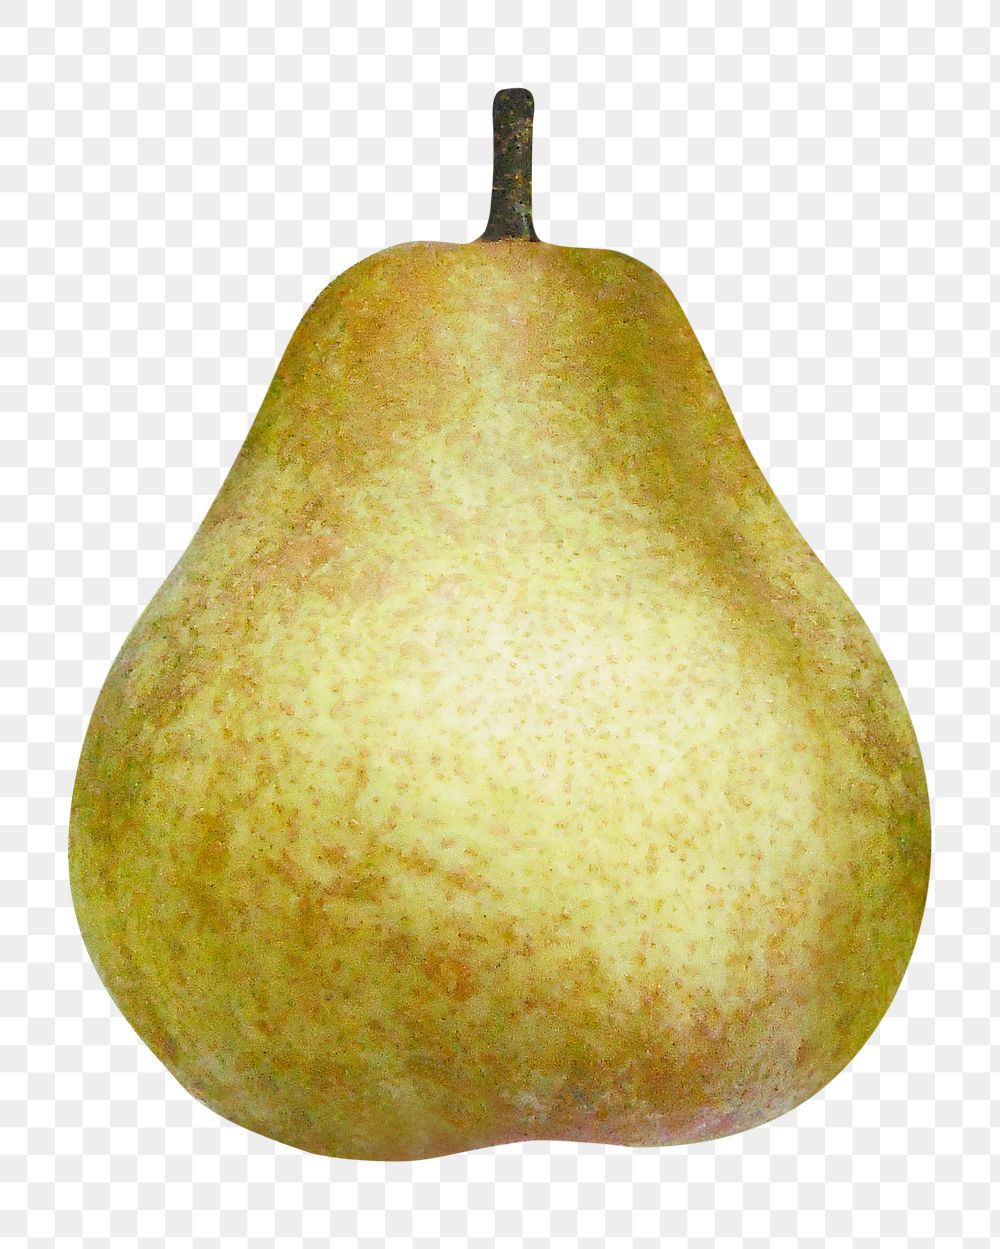 Pear fruit png sticker, transparent background